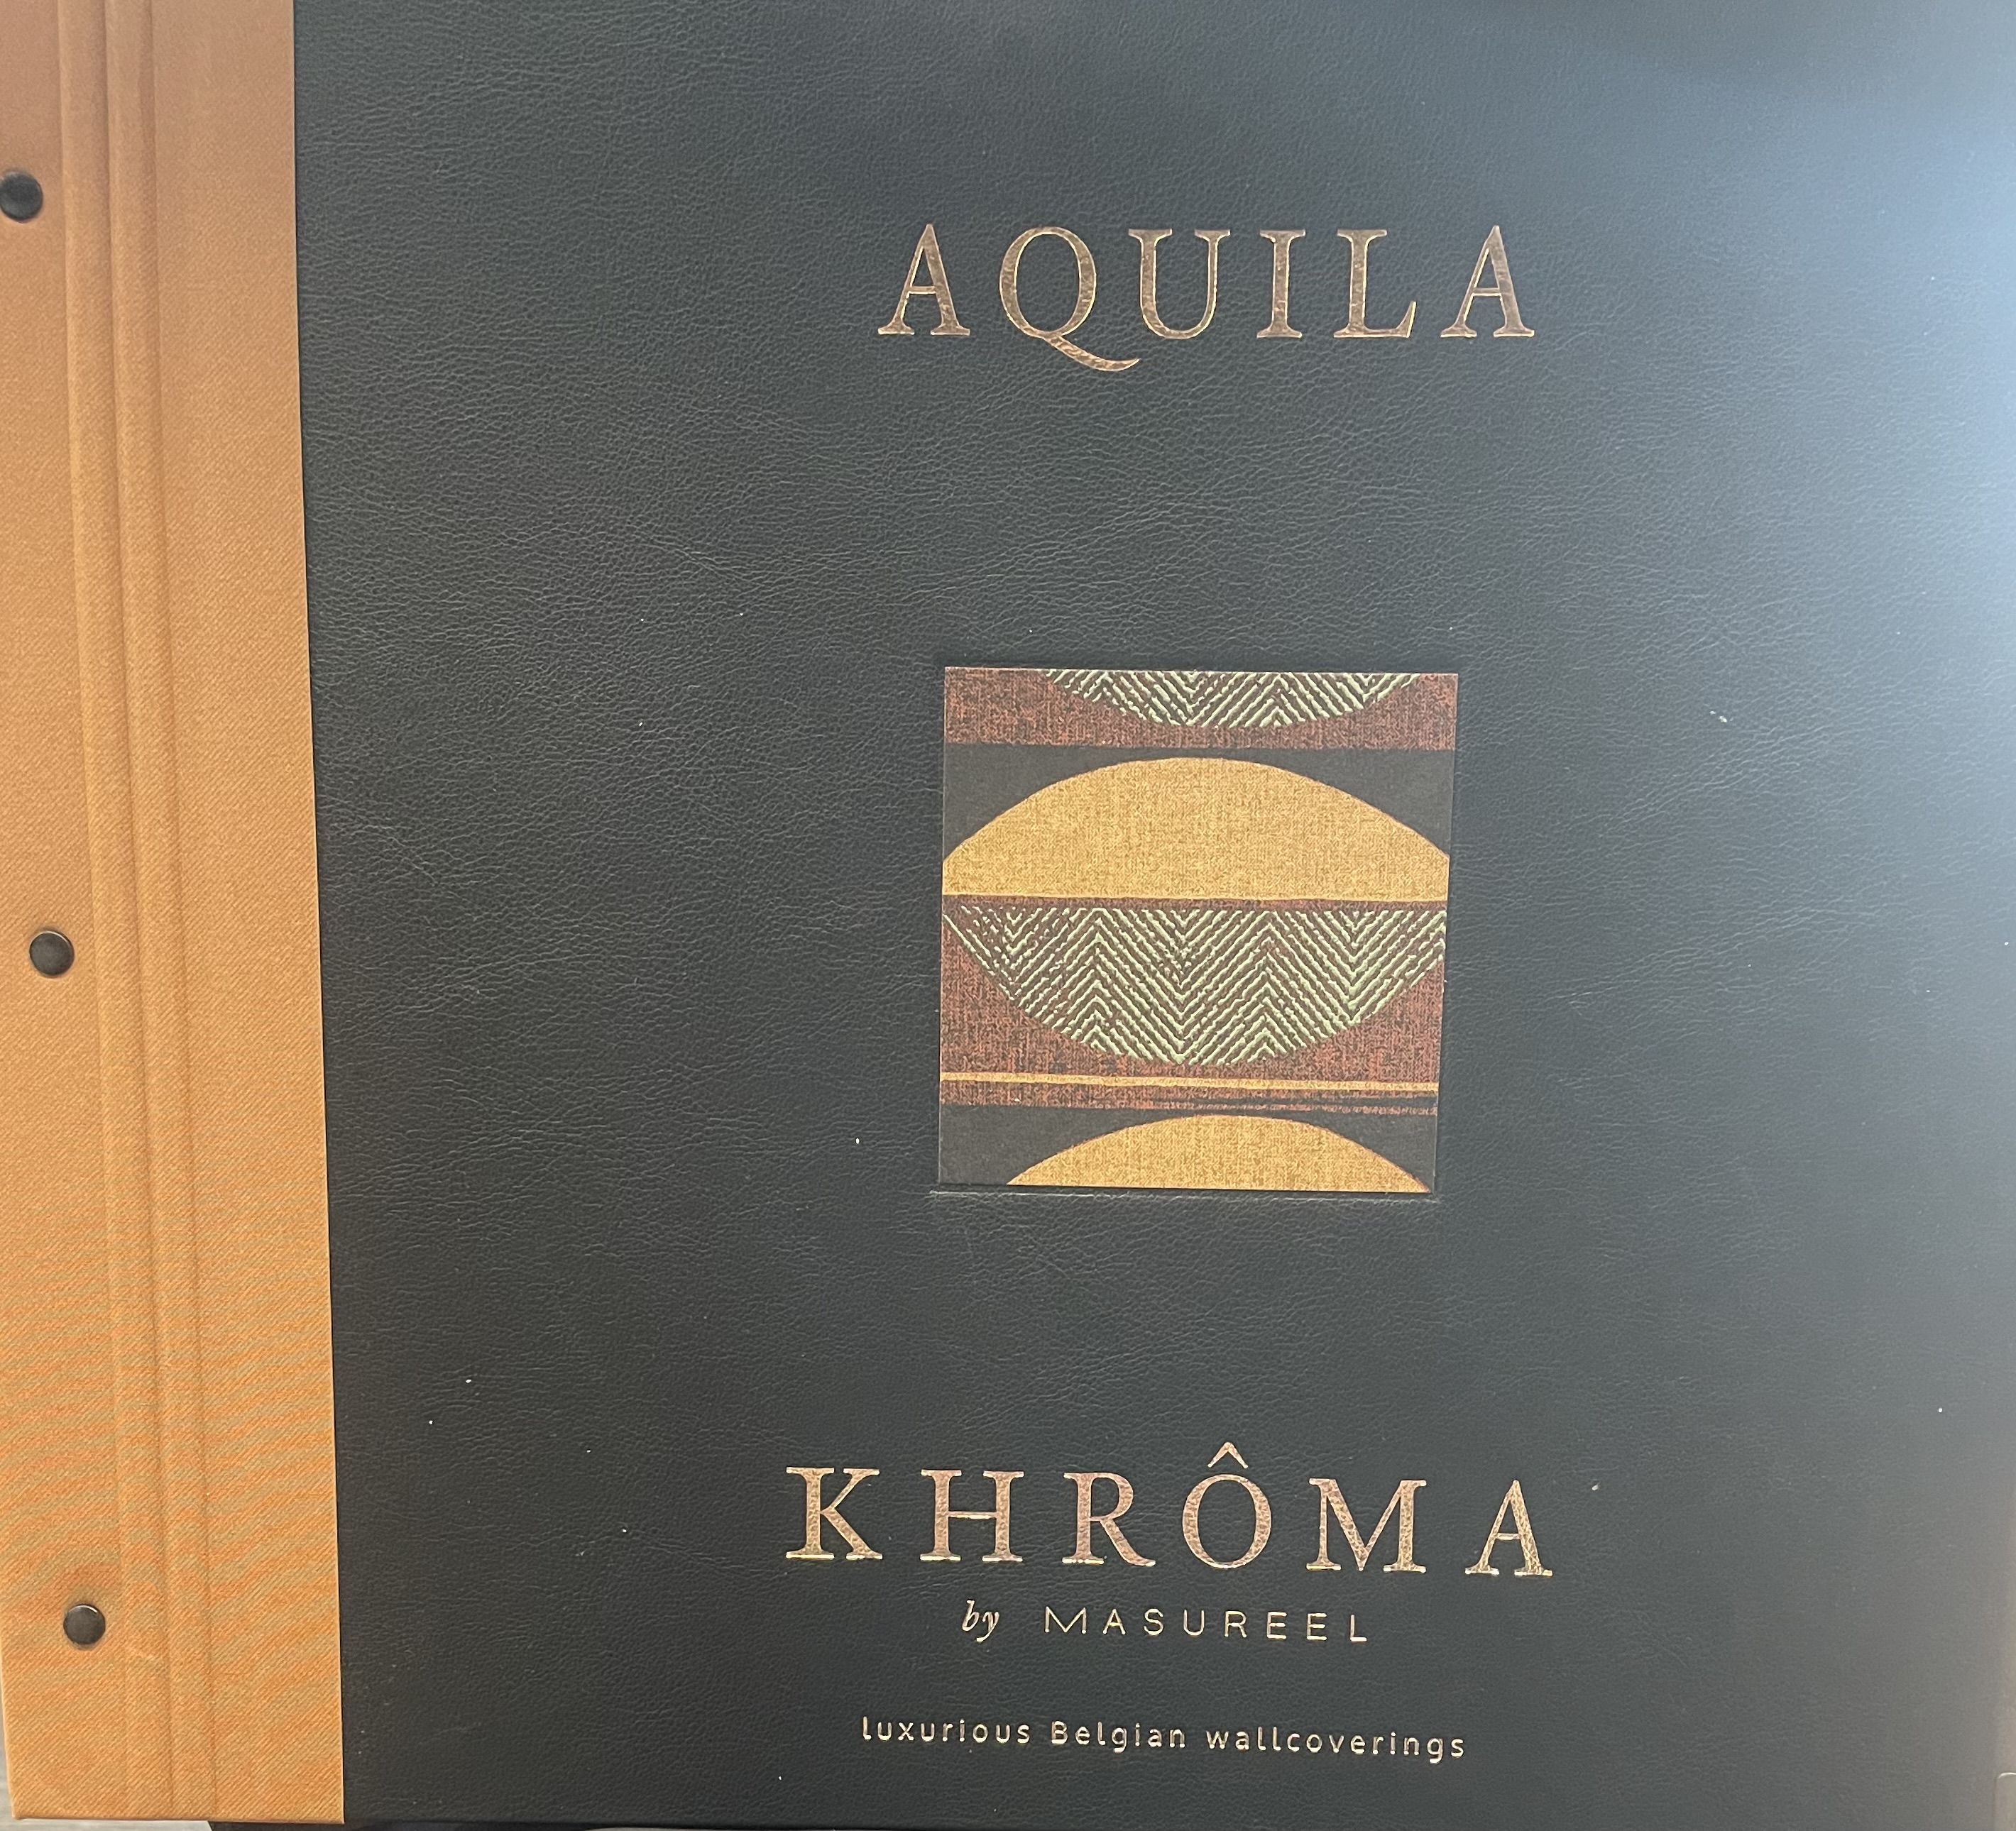 Khroma by Masureel - AQUILA